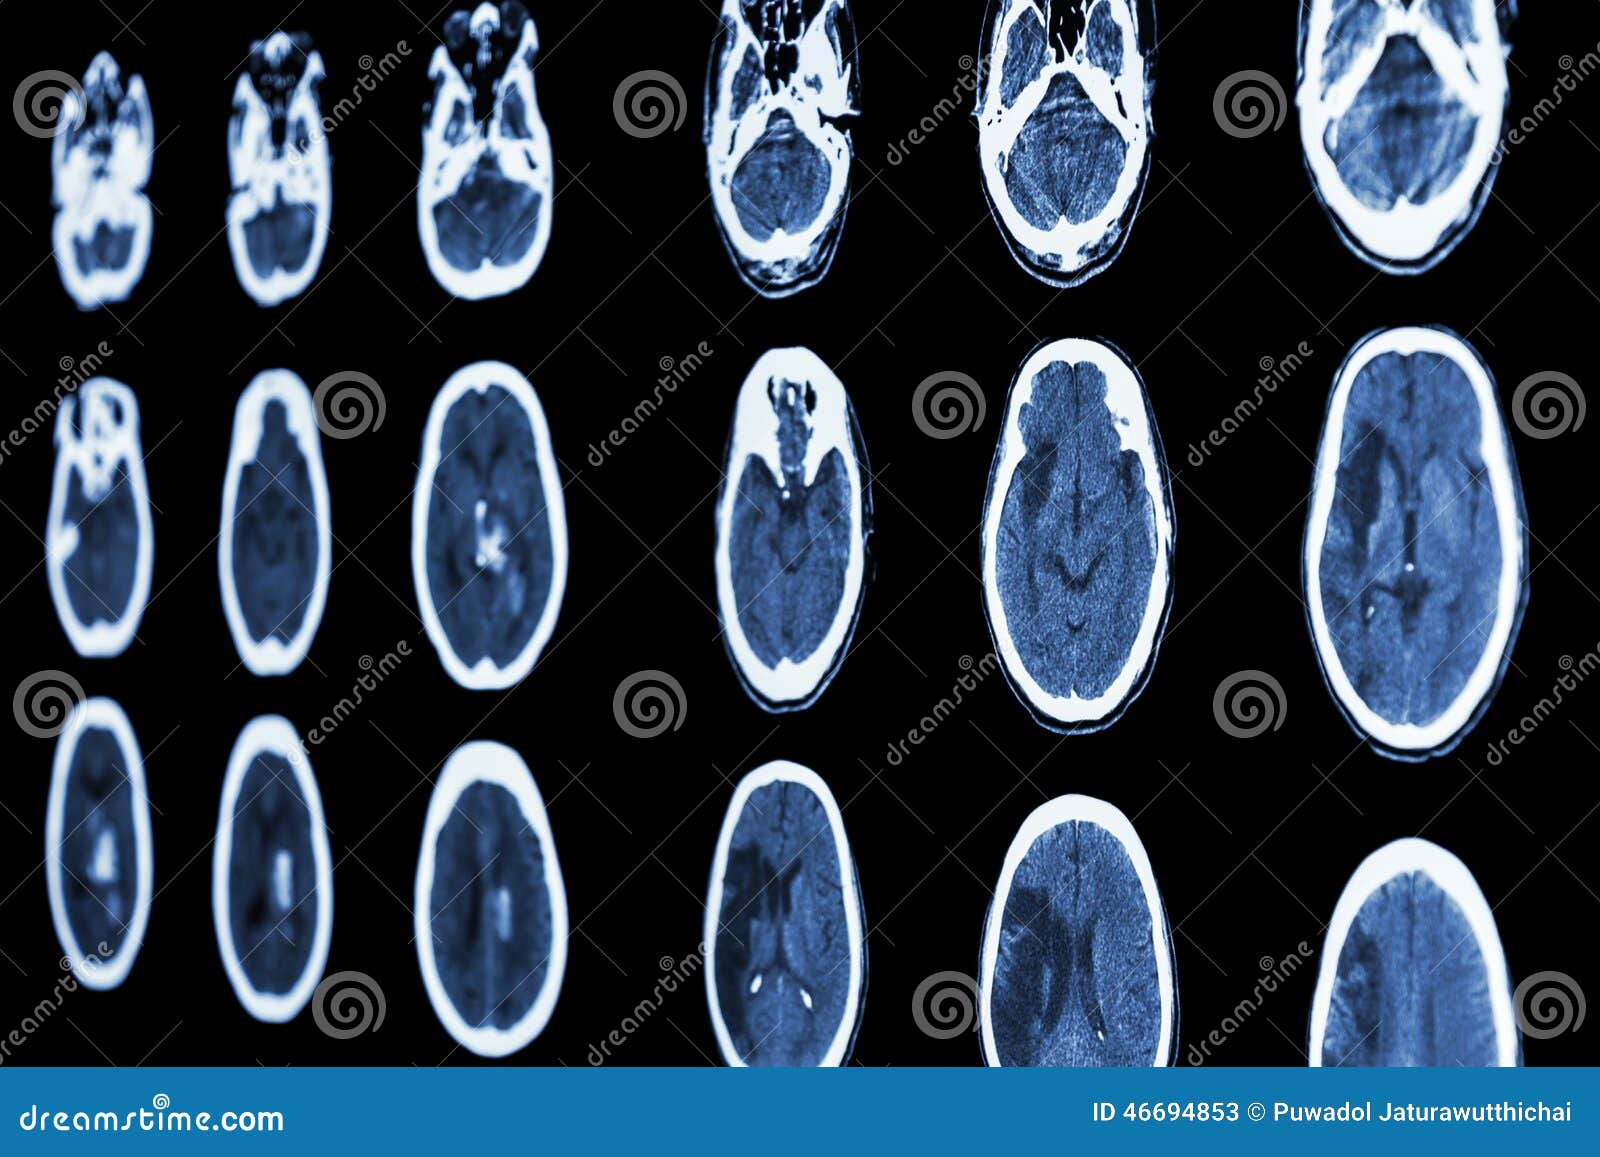 ct scan of brain show ischemic stroke and hemorrhagic stroke